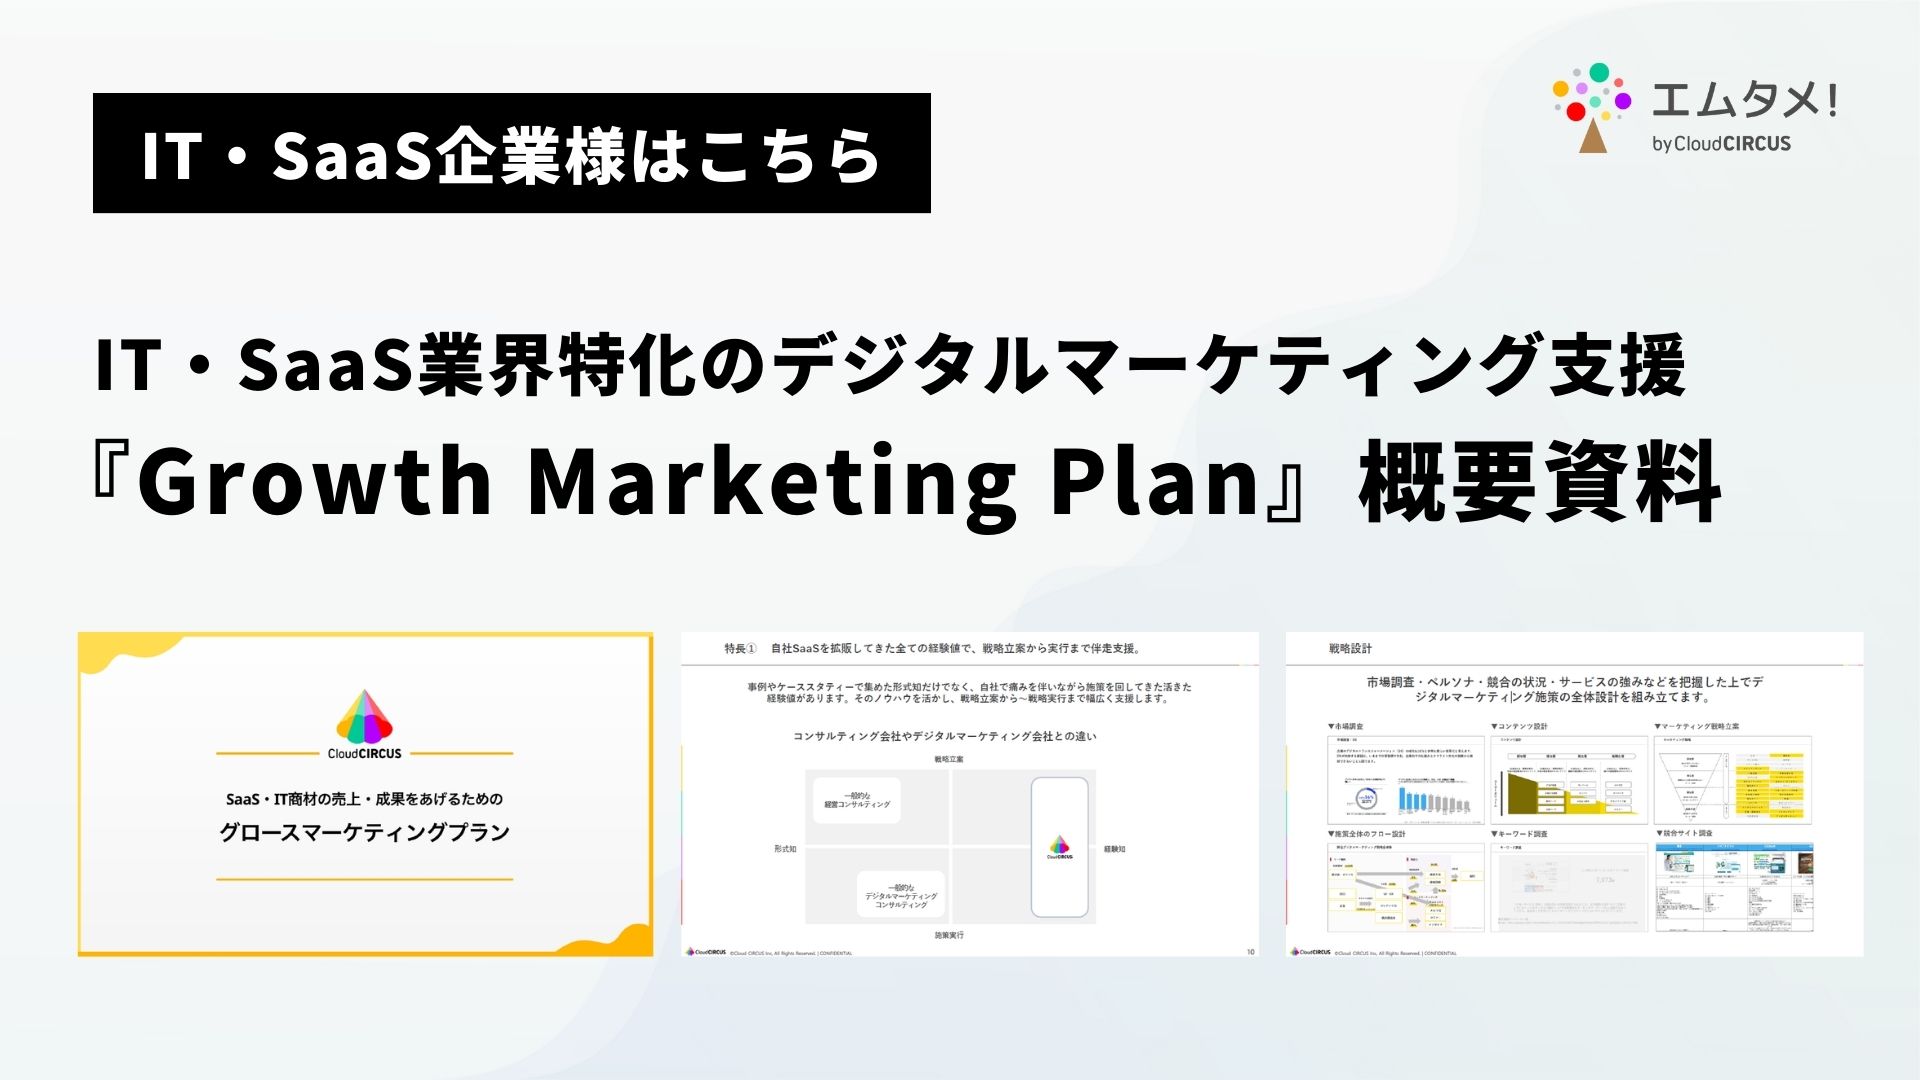 Growth Marketing Plan 概要資料